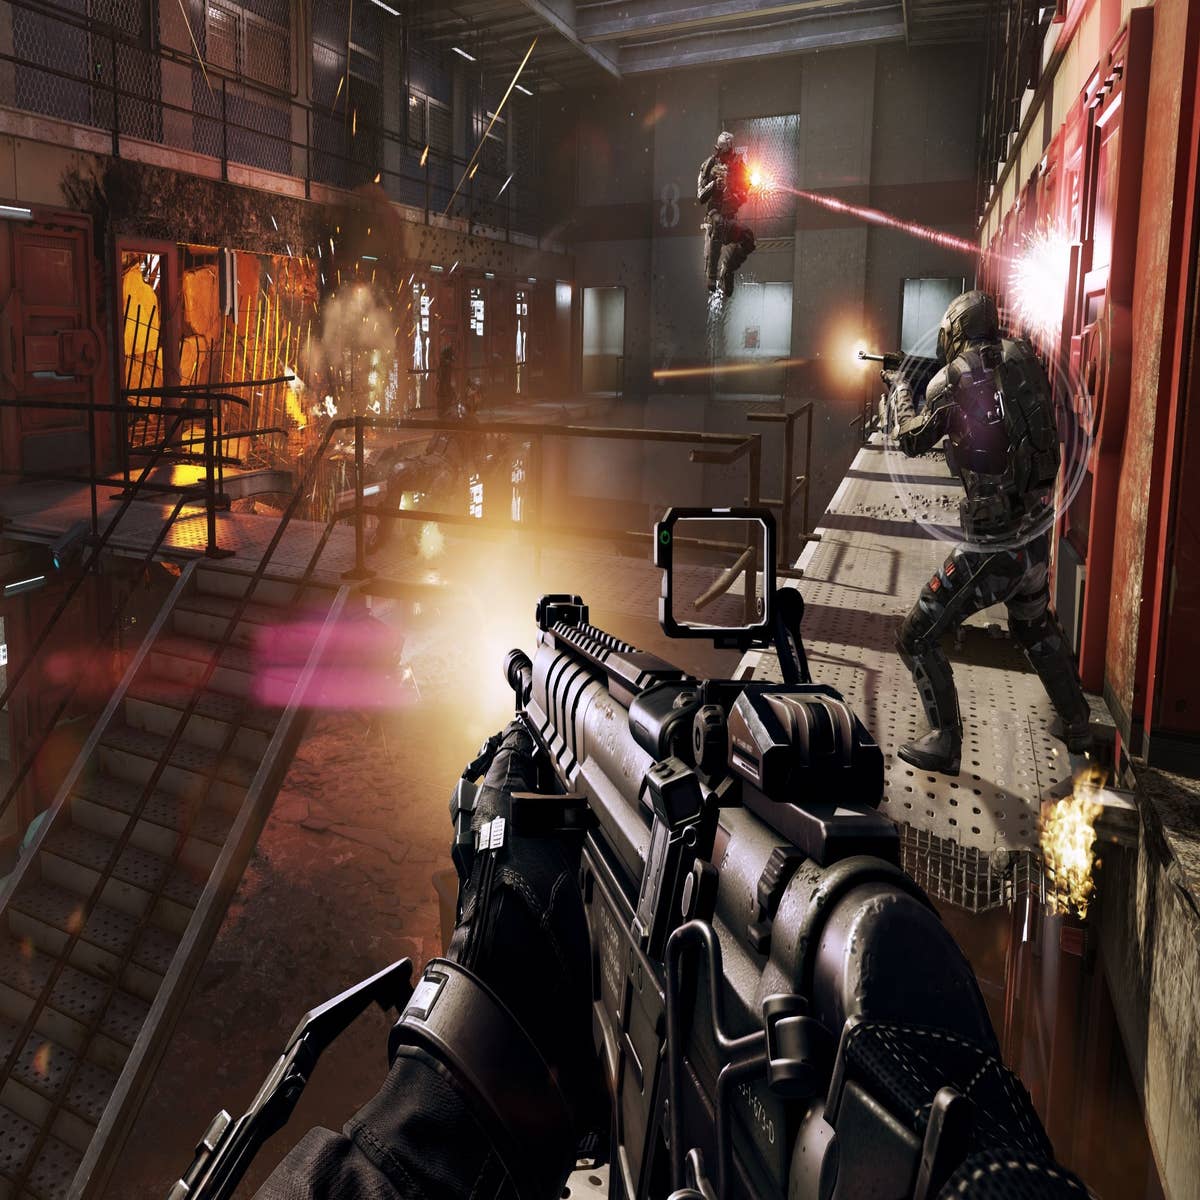 Jogo PS4 Call Of Duty : Advanced Warfare